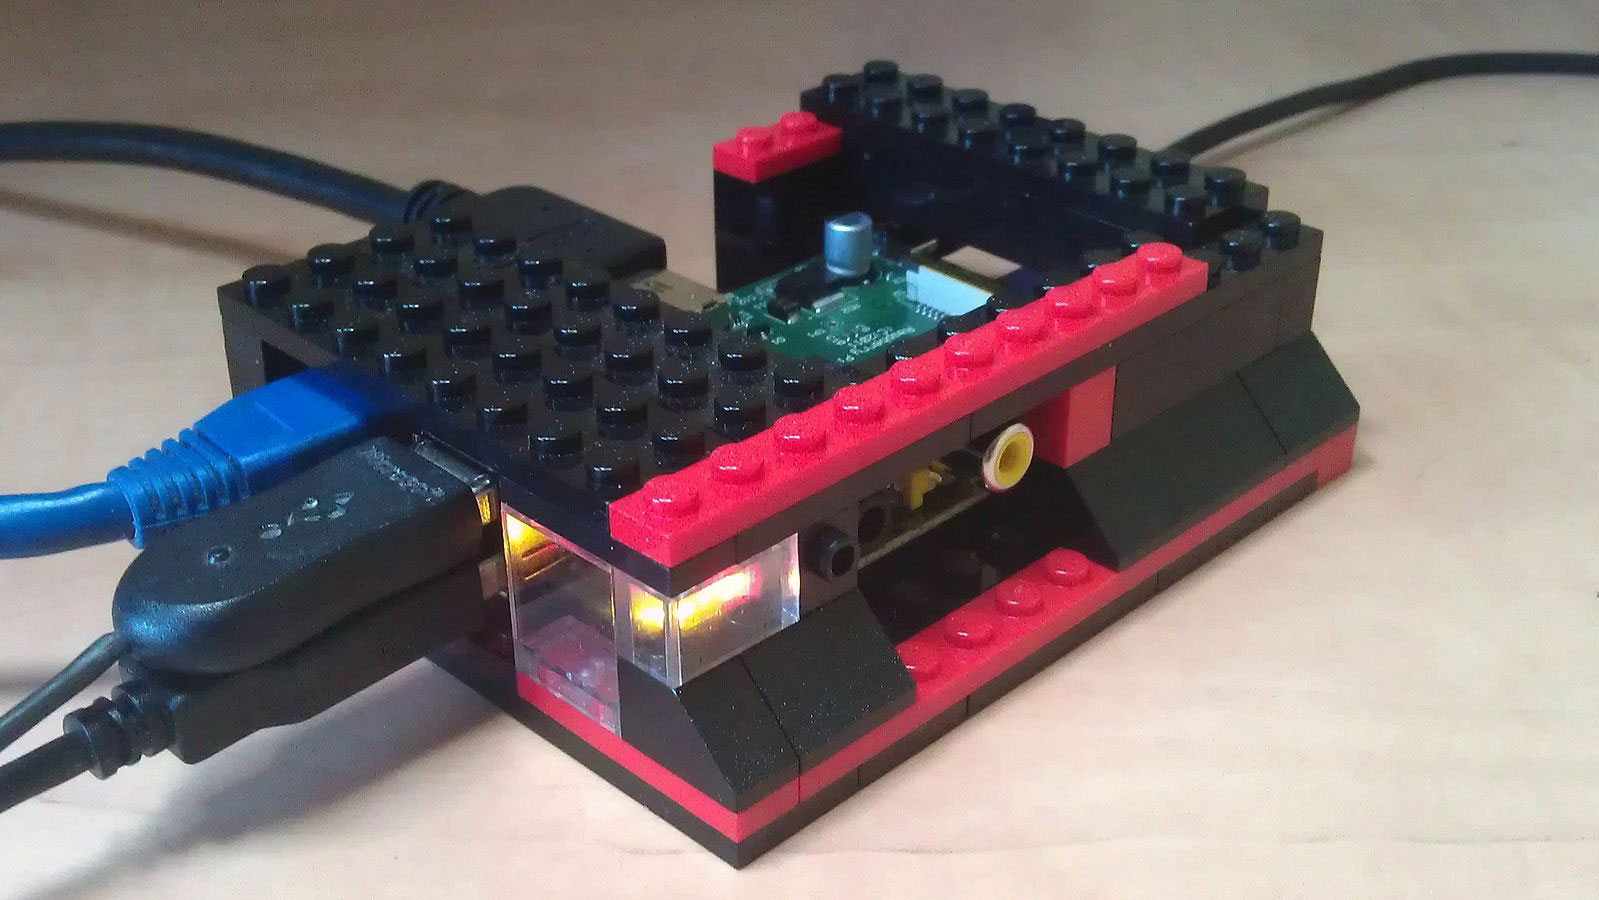 A custom Raspberry Pi LEGO case